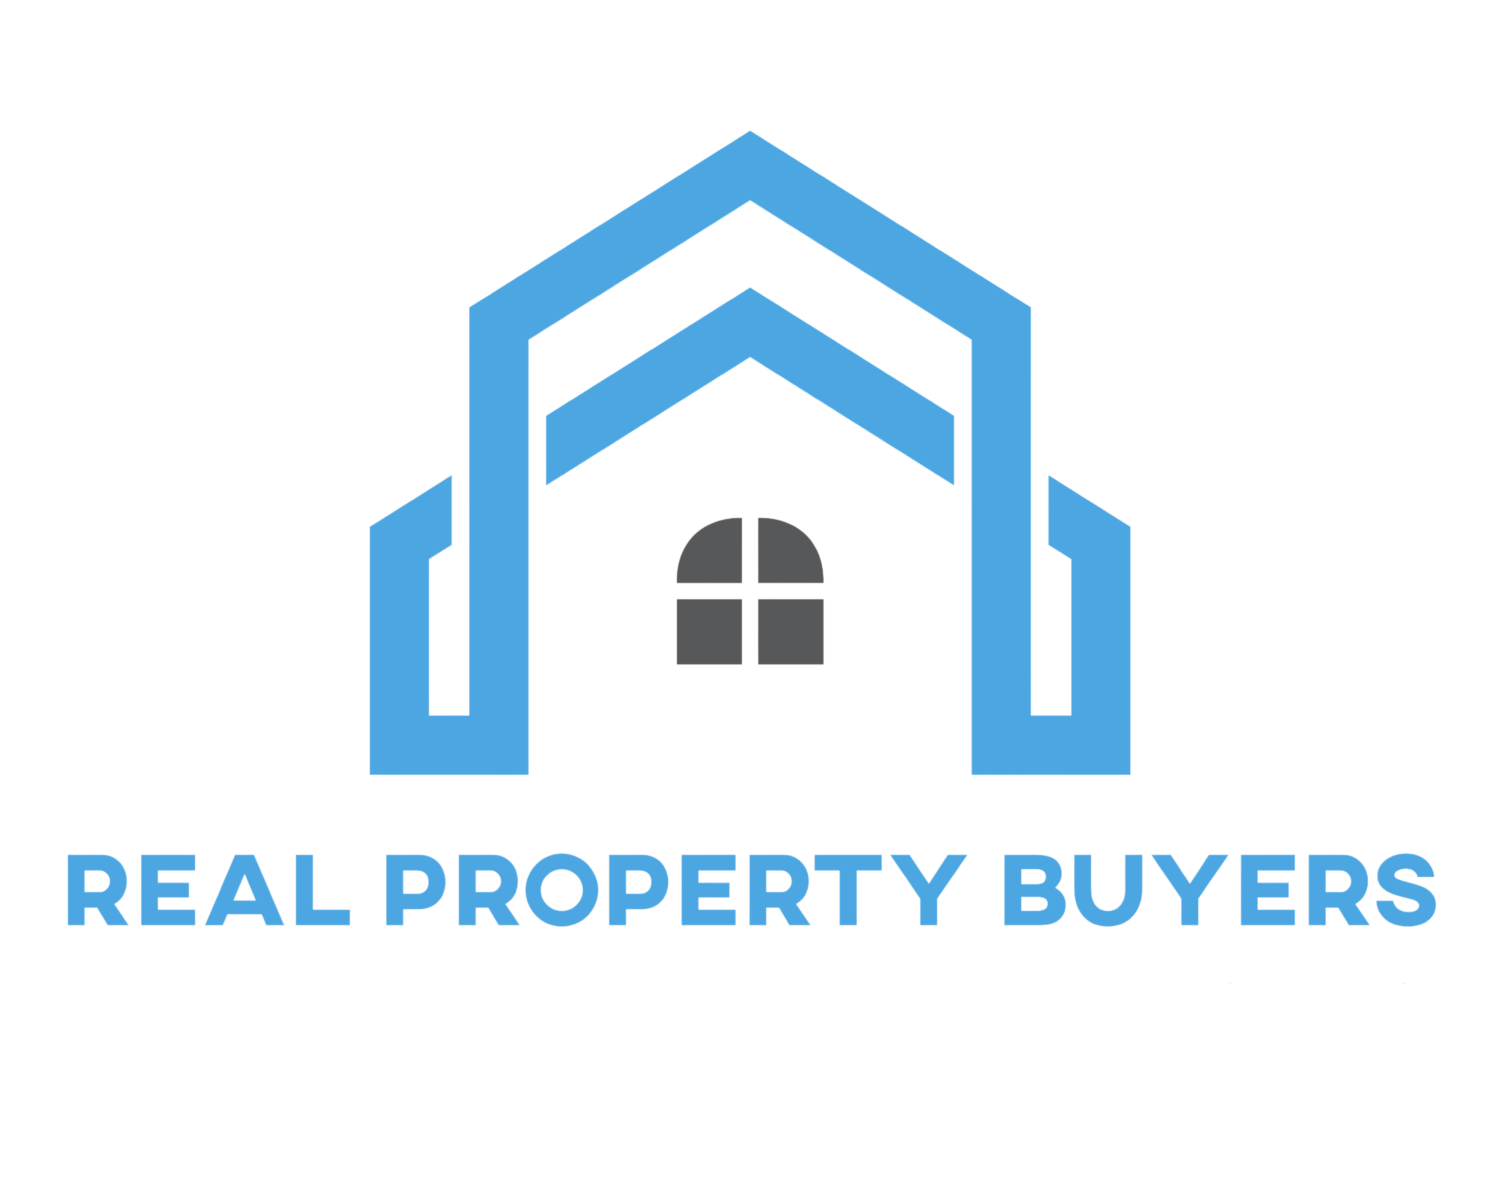 Real Property Buyers logo